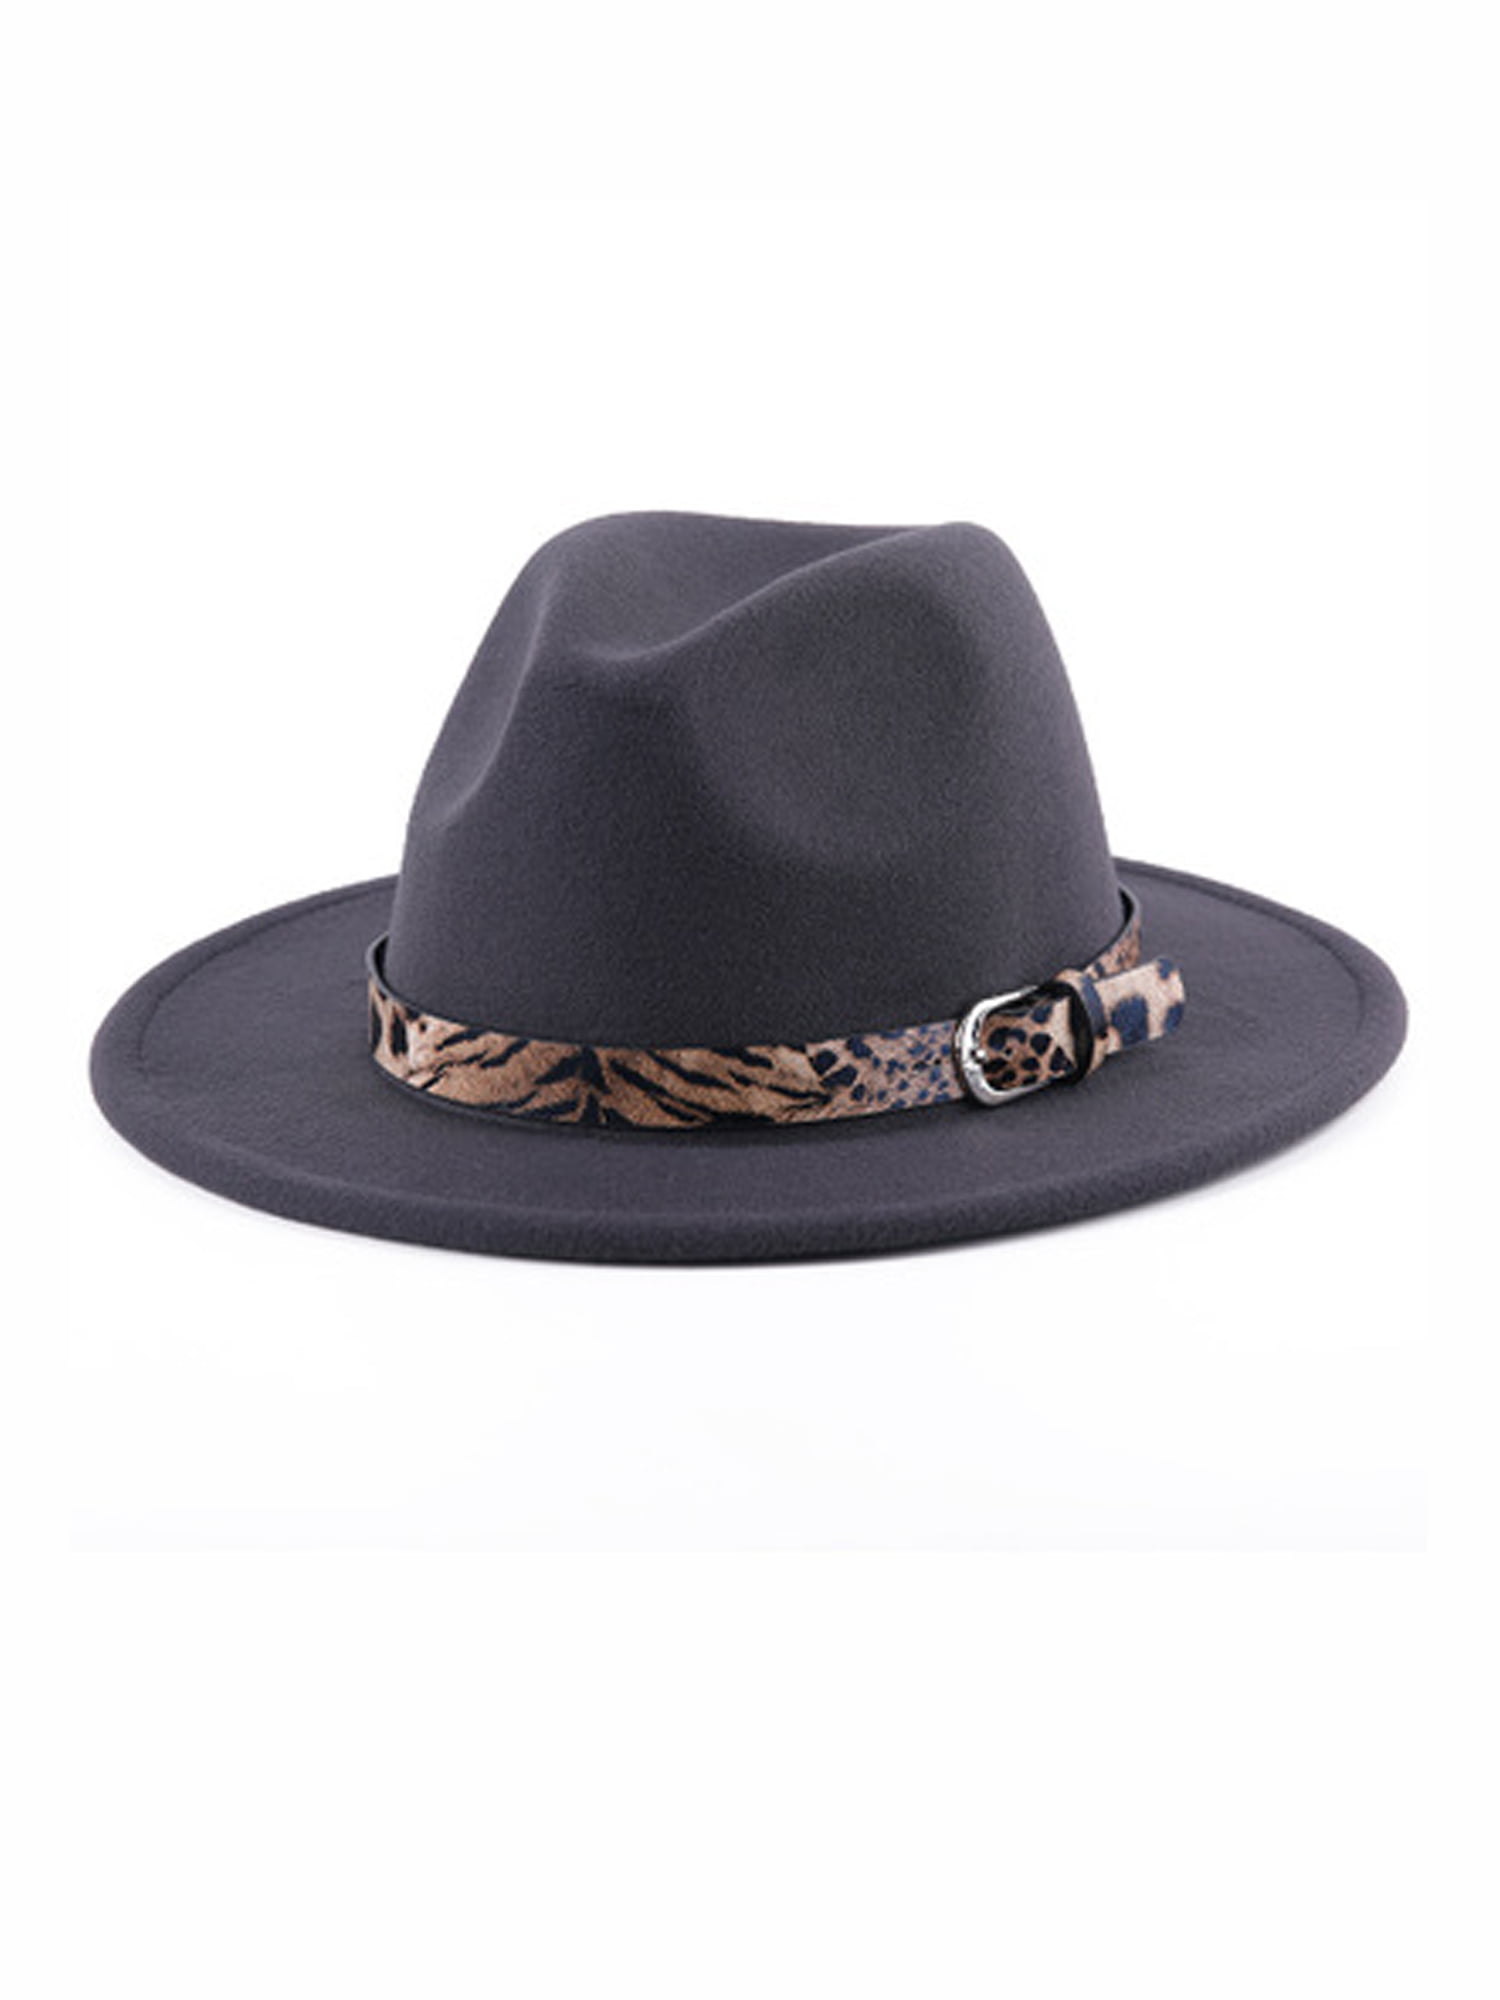 LL Mens Winter Autumn Fedoras Top Jazz Hat Panama Bowler Hats